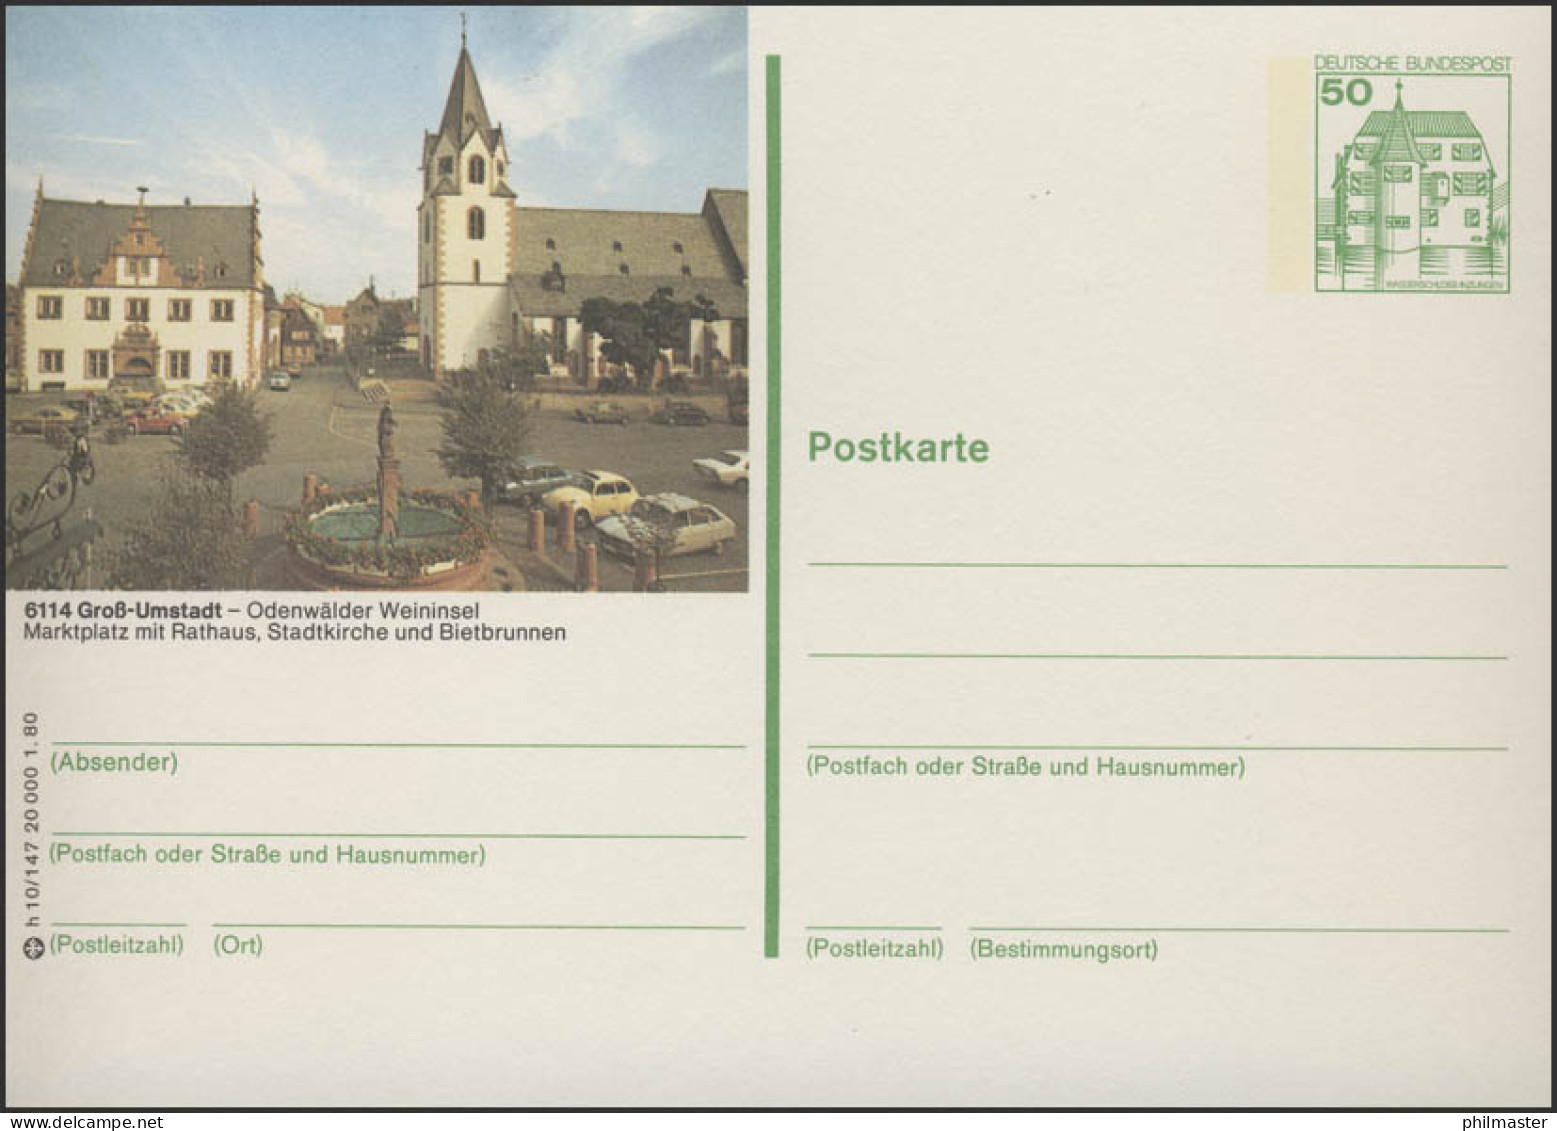 P130-h10/147 - 6114 Groß Umstadt - Marktplatz Rathaus ** - Illustrated Postcards - Mint